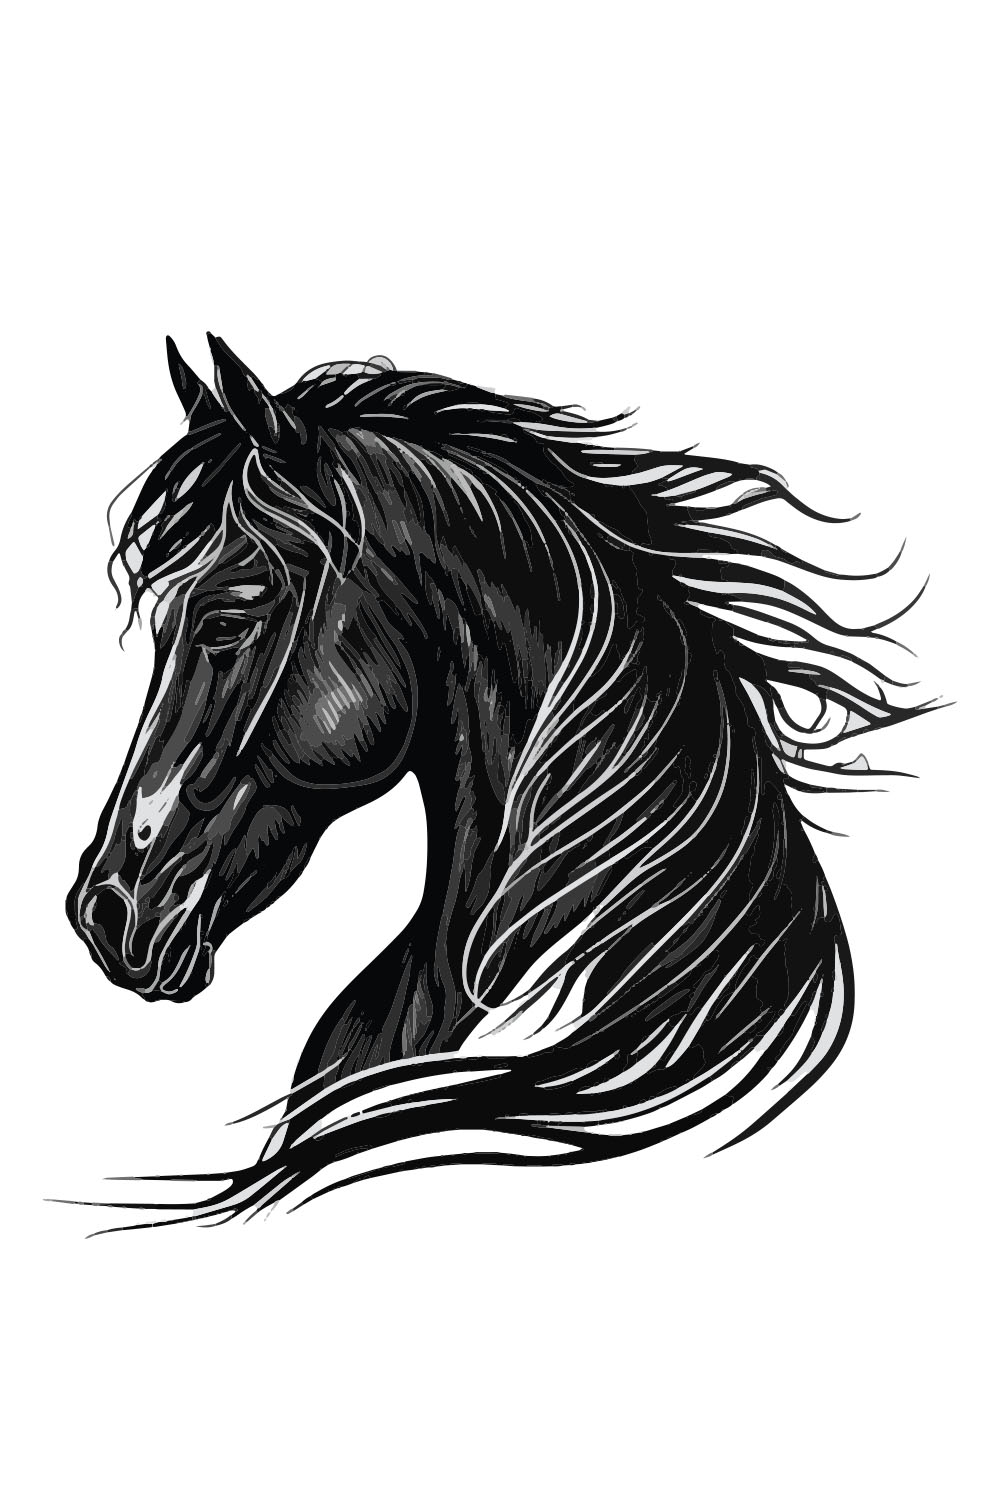 Black and white Horse logo Illustration pinterest preview image.